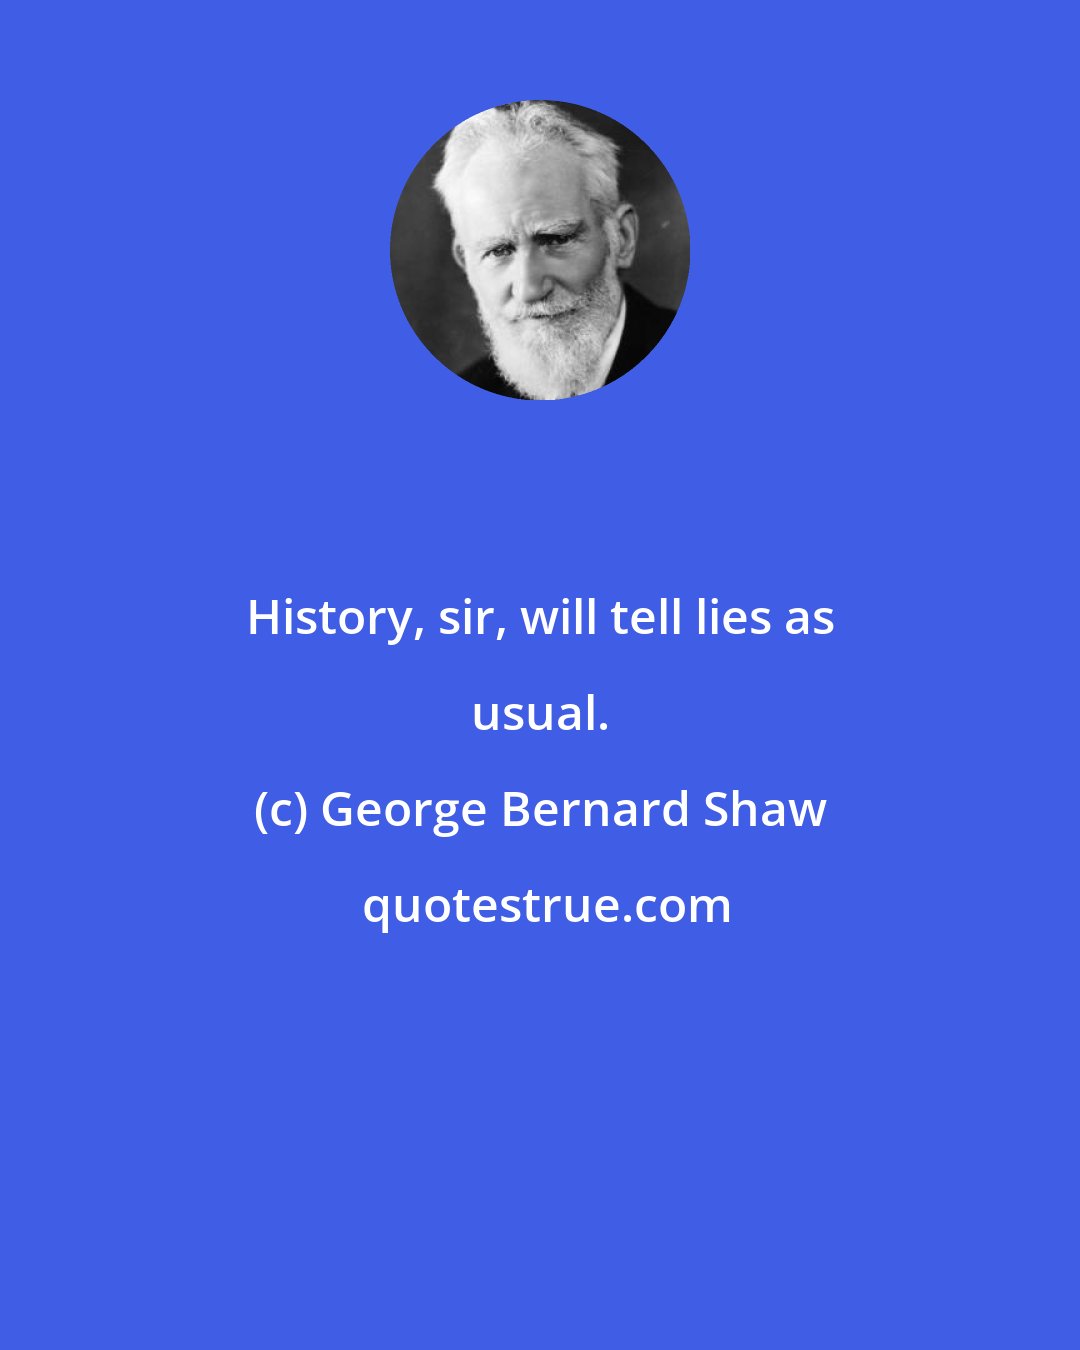 George Bernard Shaw: History, sir, will tell lies as usual.